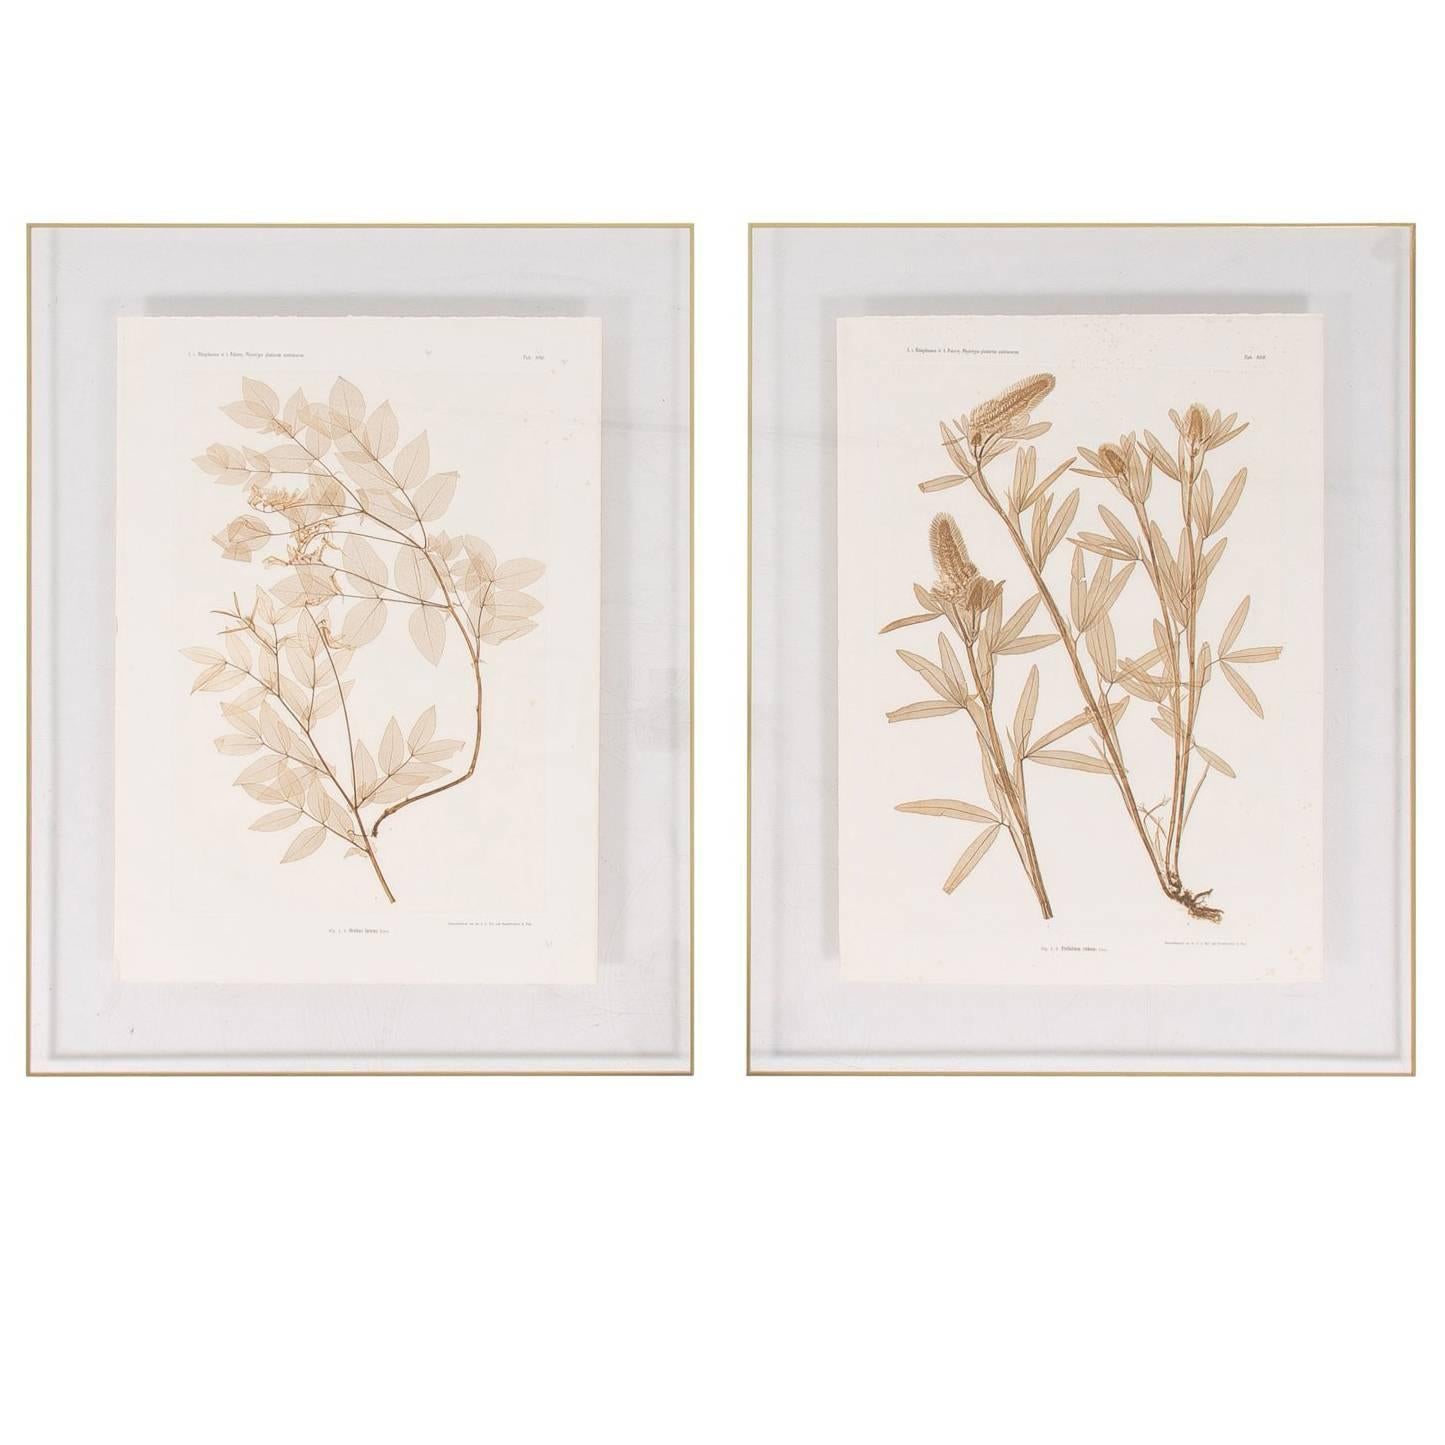 Pair of Botanical Prints by Constantin von Ettingshausen